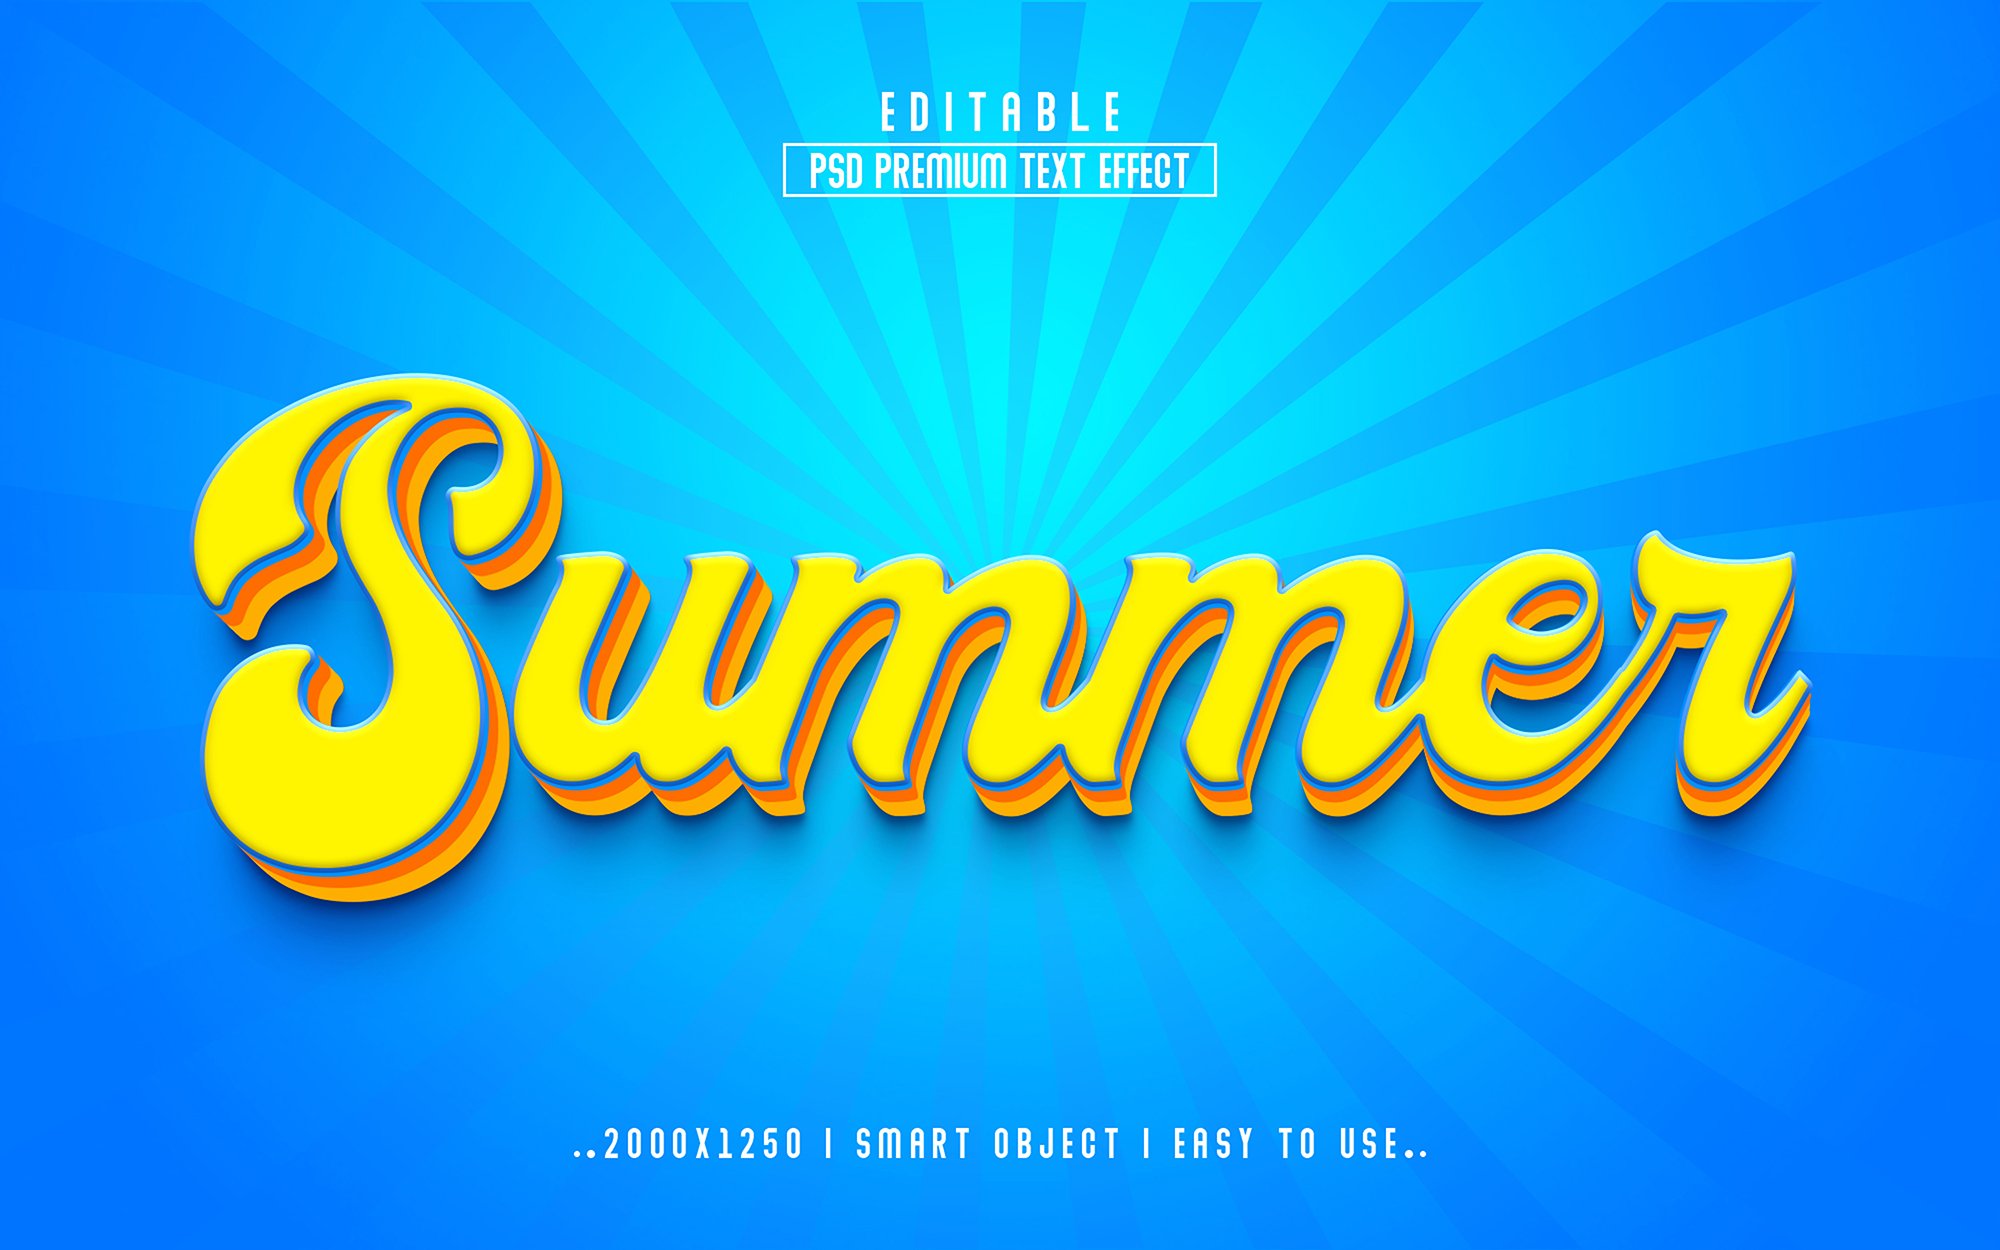 Summer 3D Editable psd Text Effectcover image.